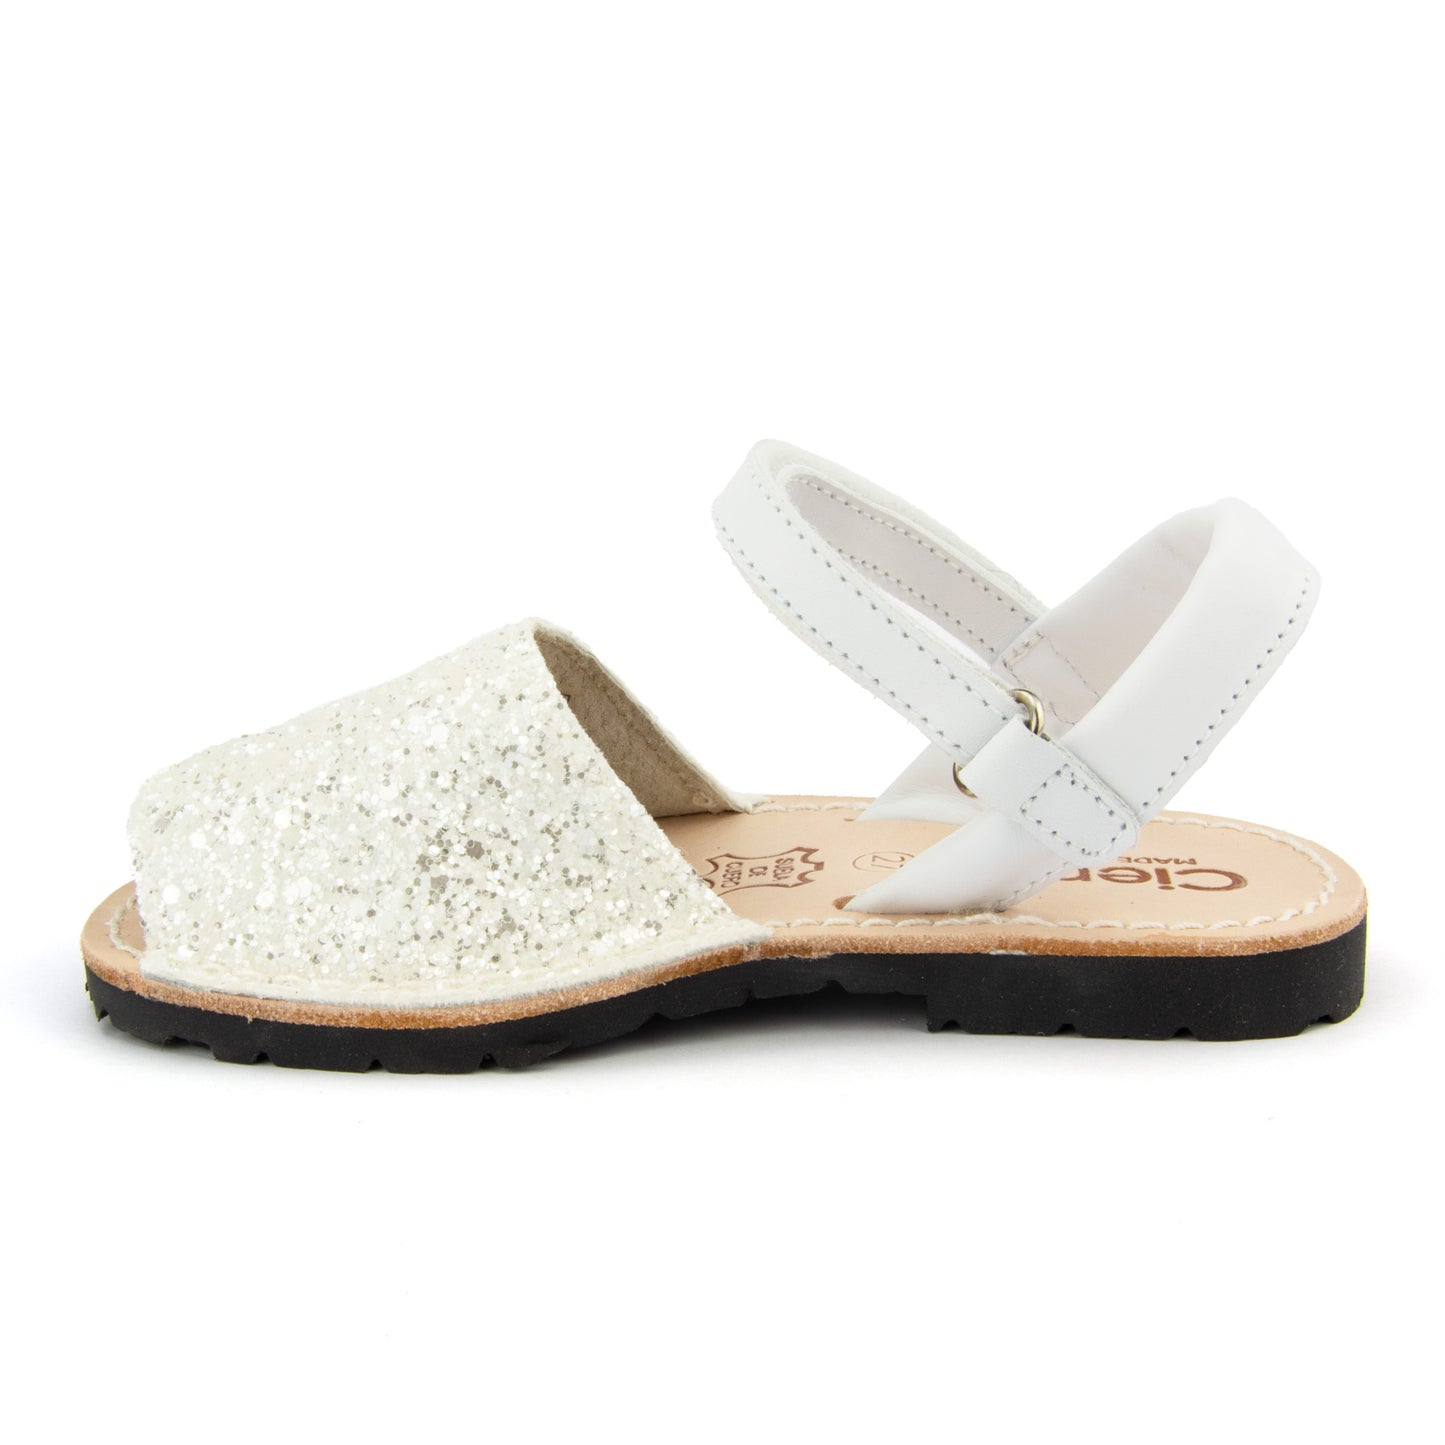 Cienta Menorquina Sandals / 1041014-05